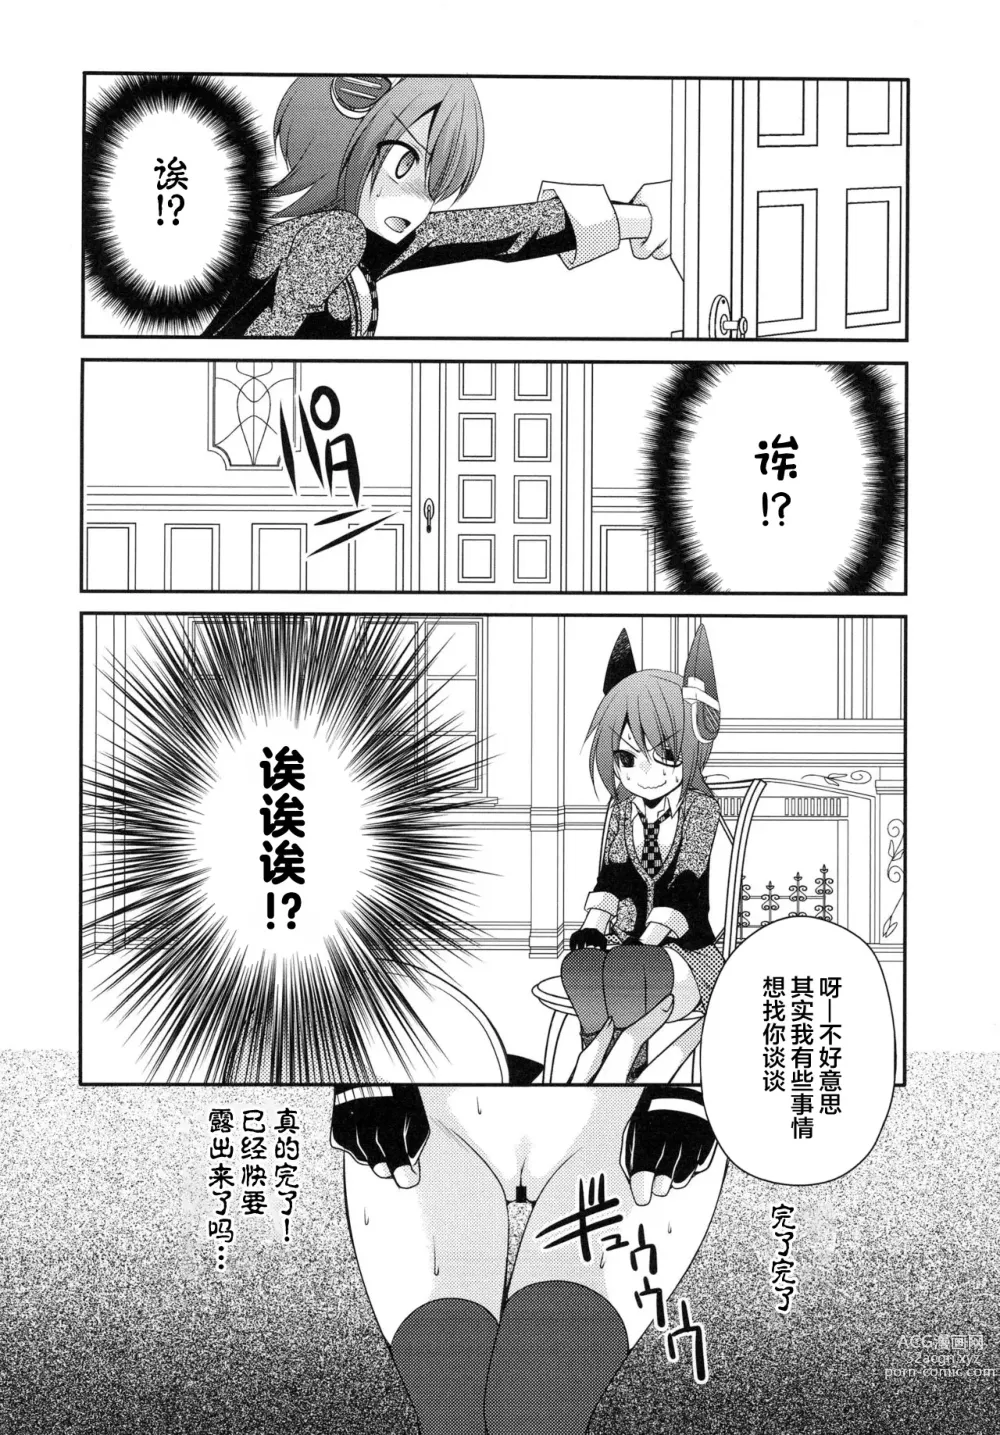 Page 7 of doujinshi 漏尿的天龙